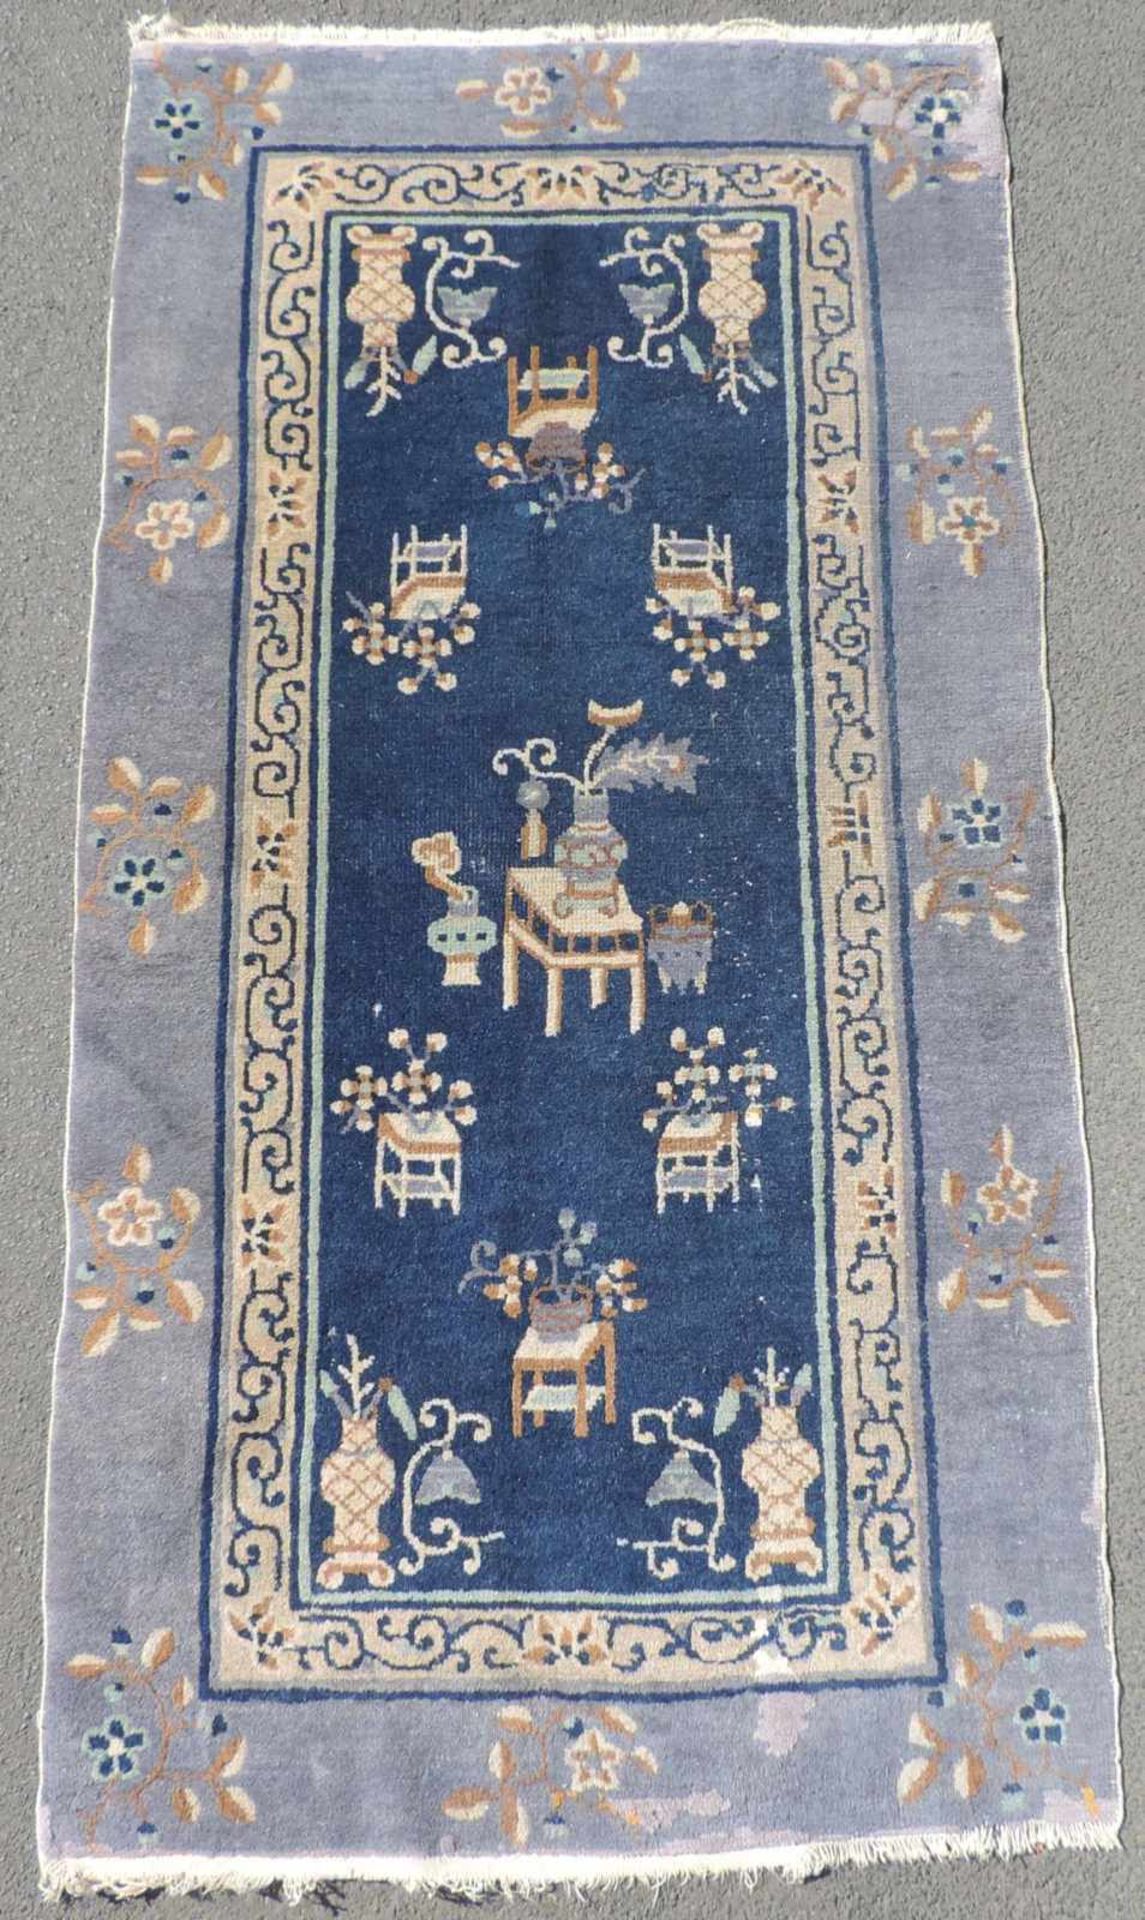 Pau Tou Teppich China, antik, Ende 19. Jahrhundert. 180 cm x 93 cm. Handgeknüpft. Wolle auf